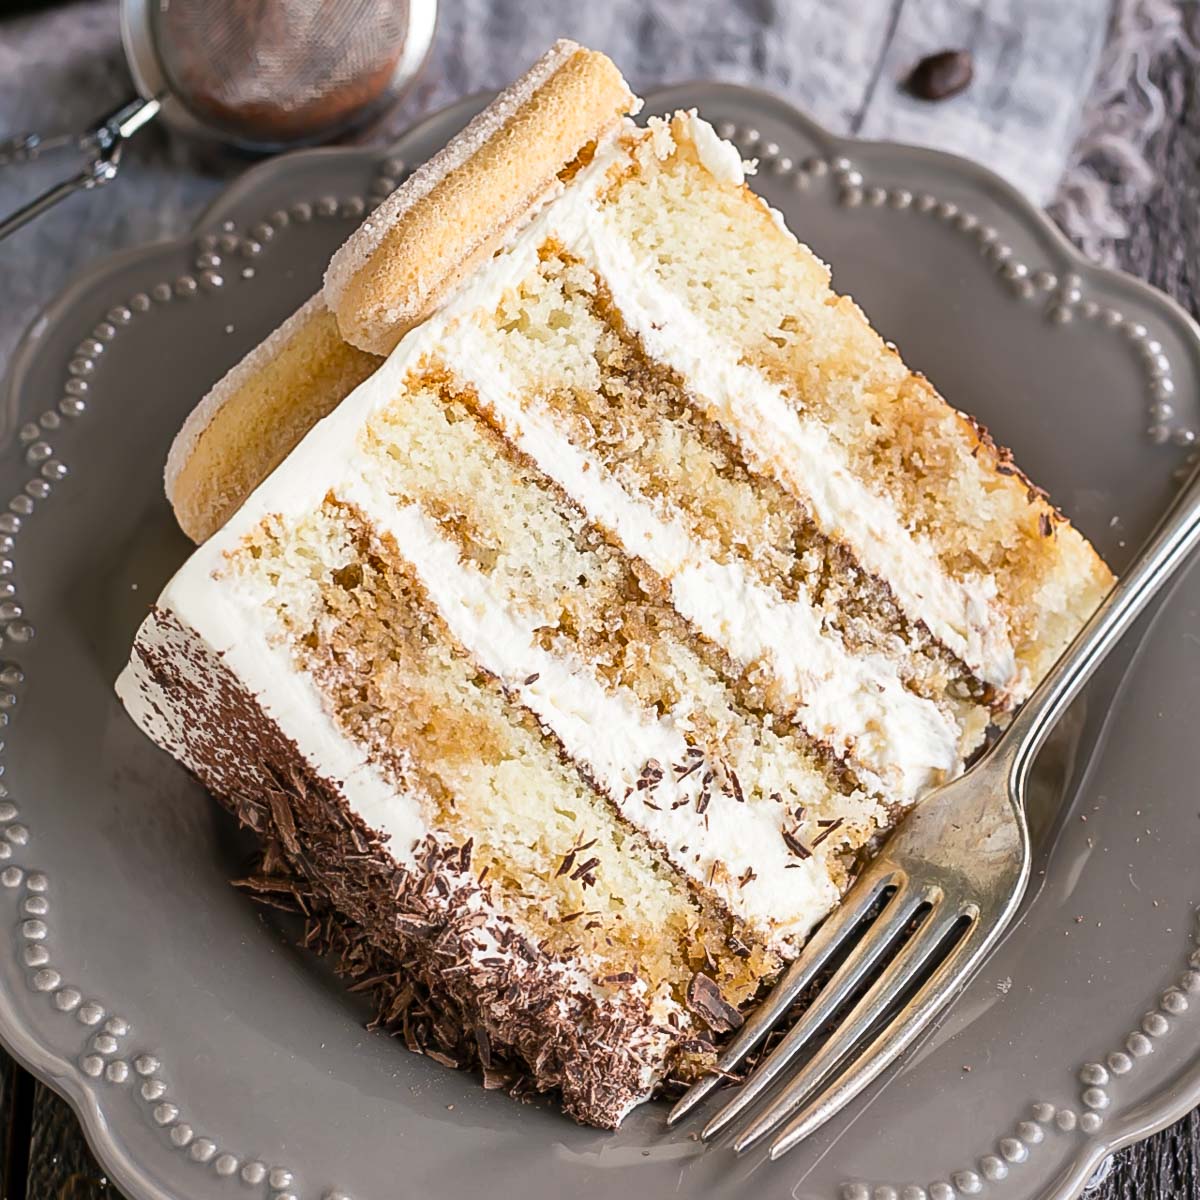 Tips For Making This Tiramisu Cake